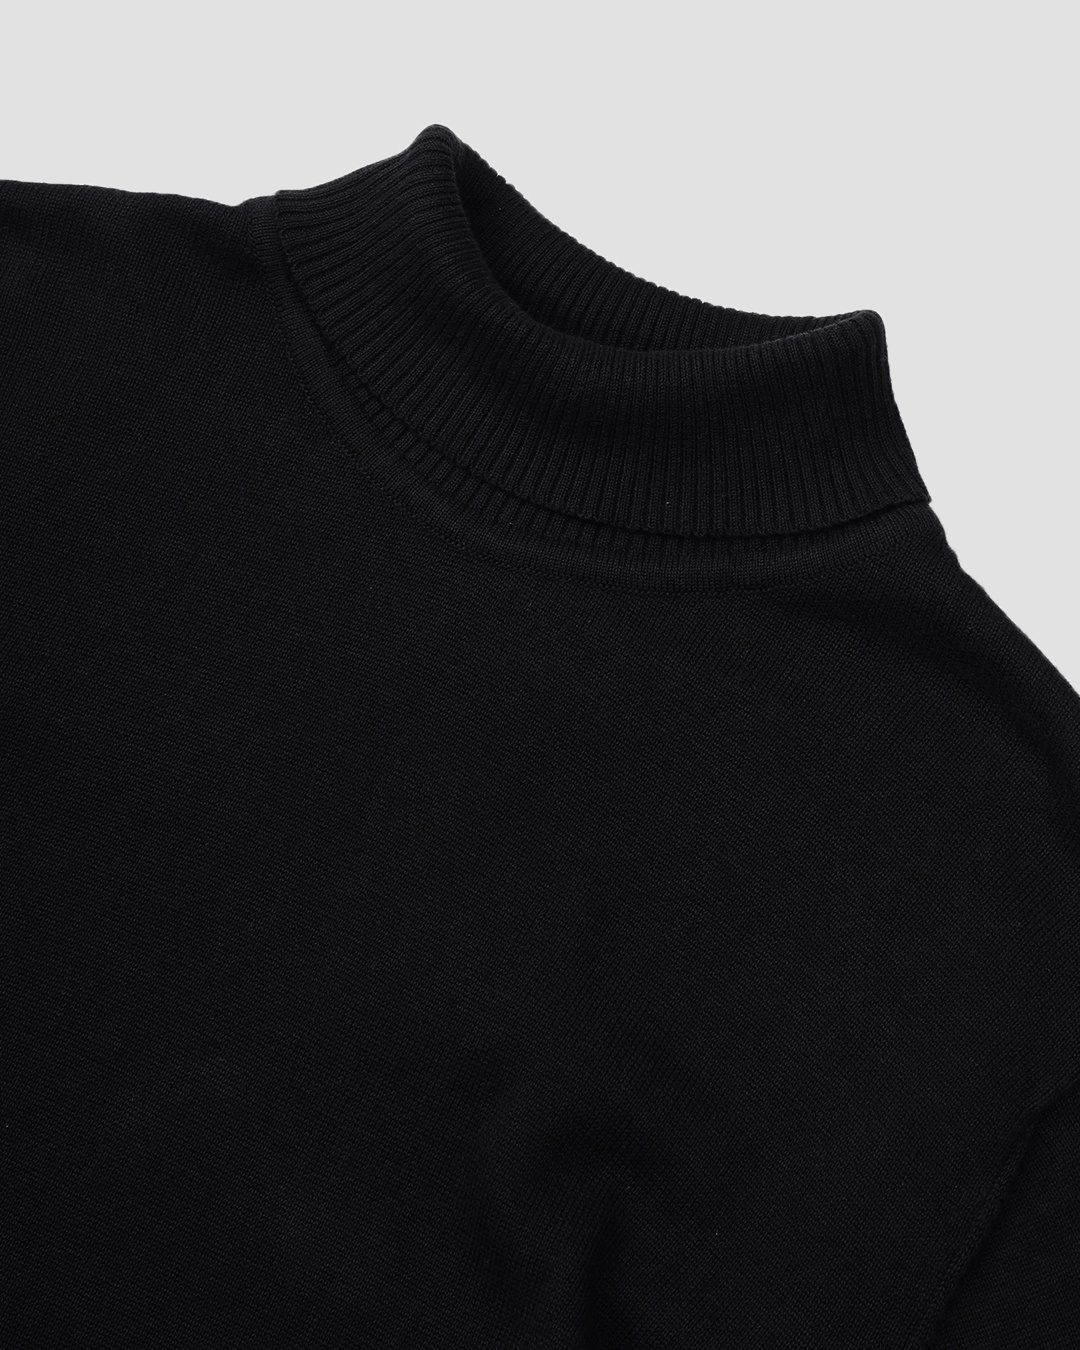 Shop Men's Black High Neck Sweater